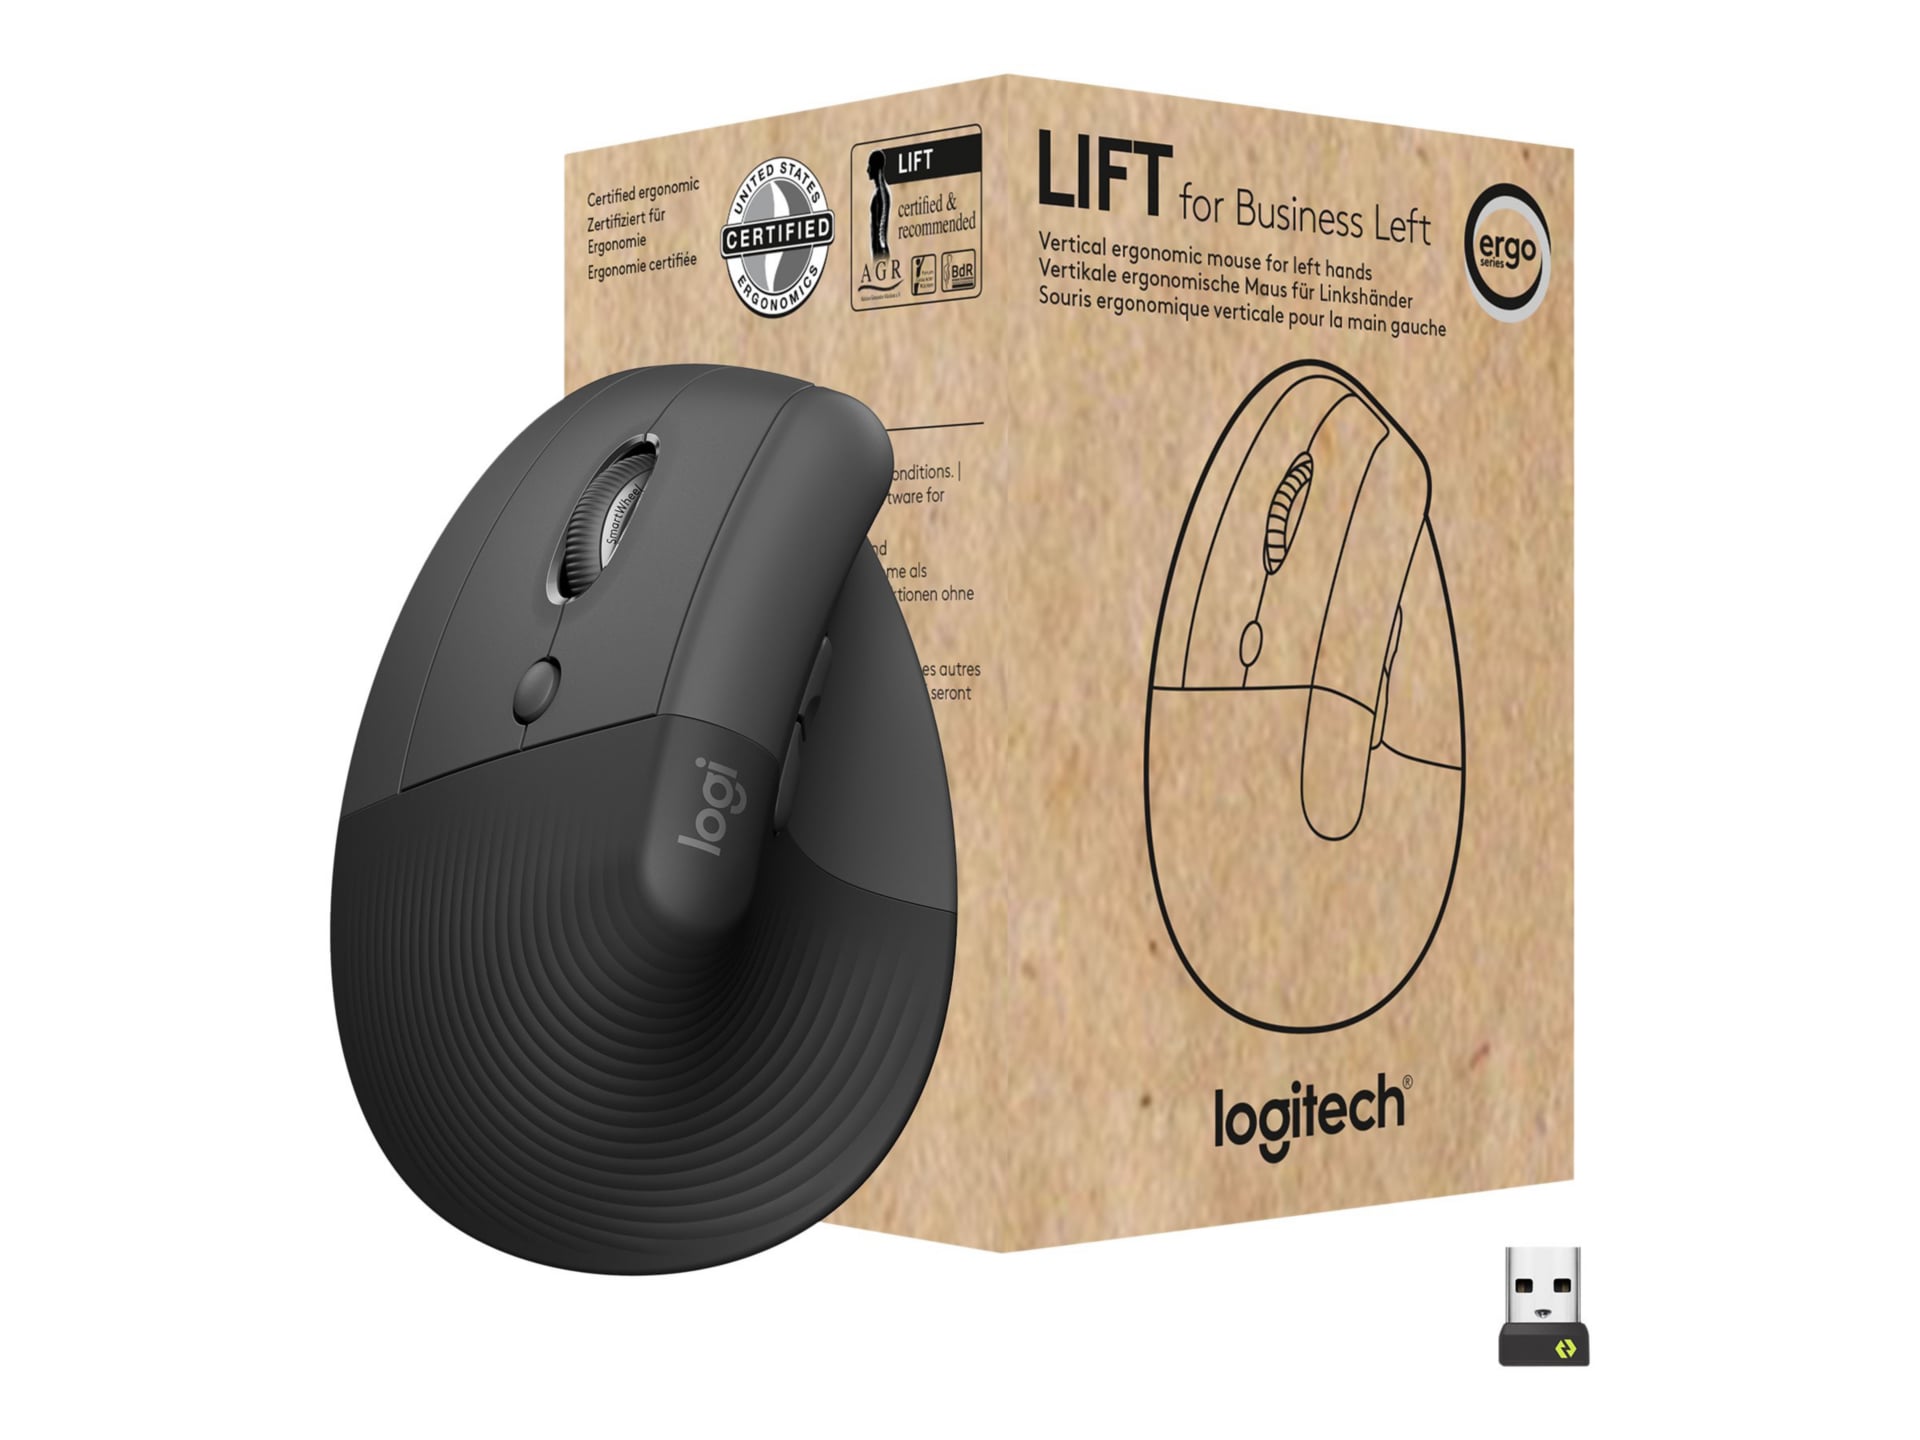 Logitech Lift Vertical Ergonomic Mouse for Business, Left - vertical mouse